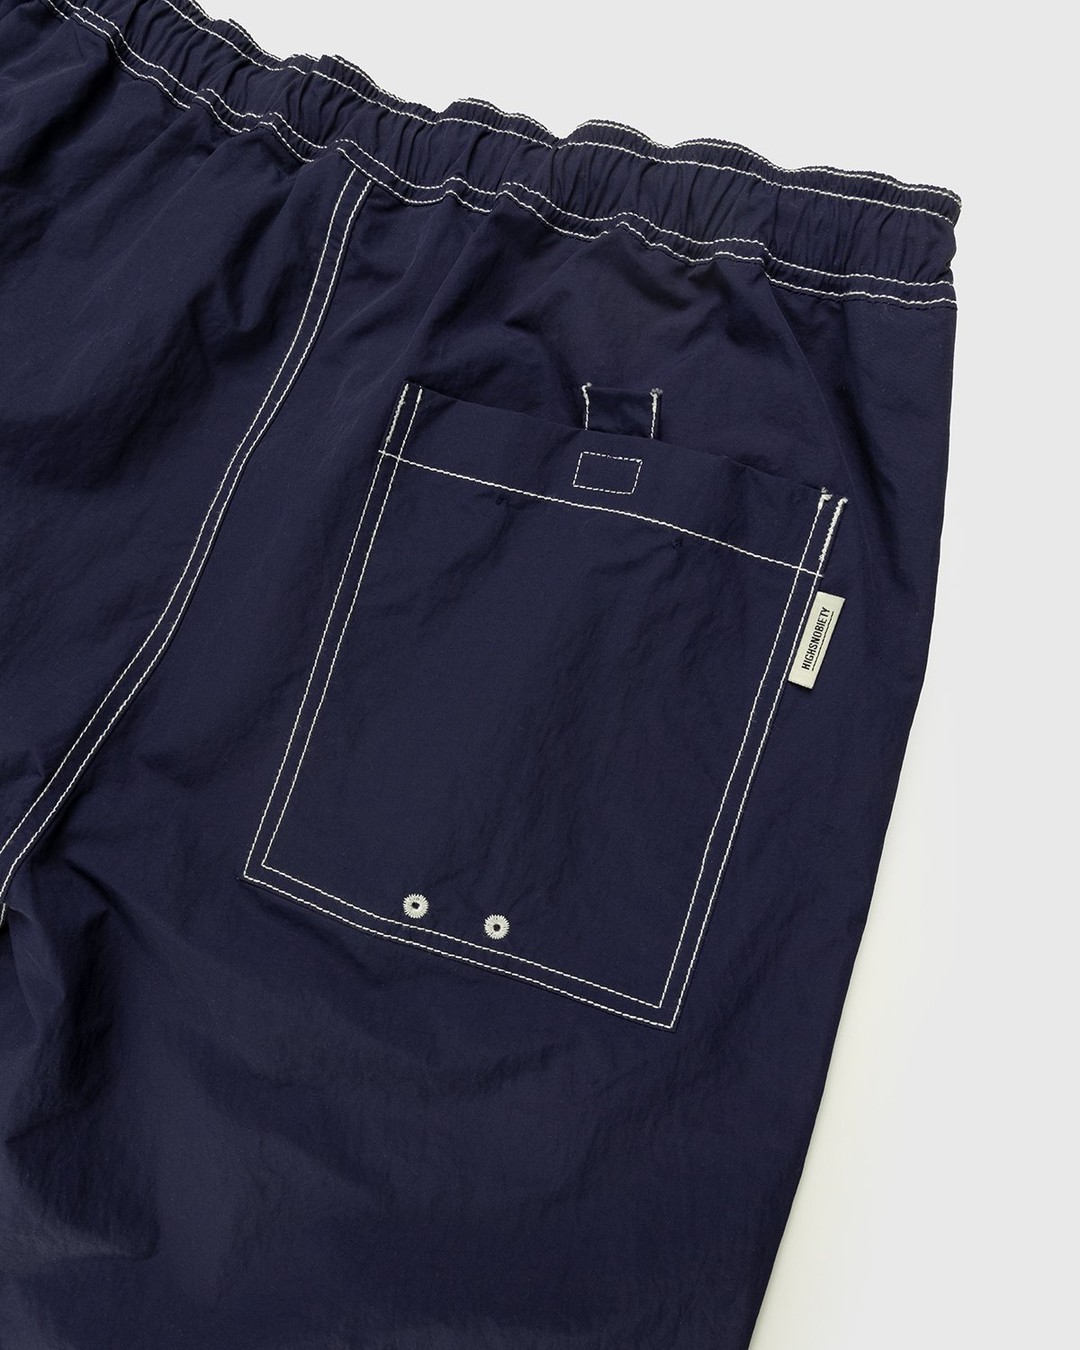 Highsnobiety – Contrast Brushed Nylon Elastic Pants Navy - Active Pants - Blue - Image 3